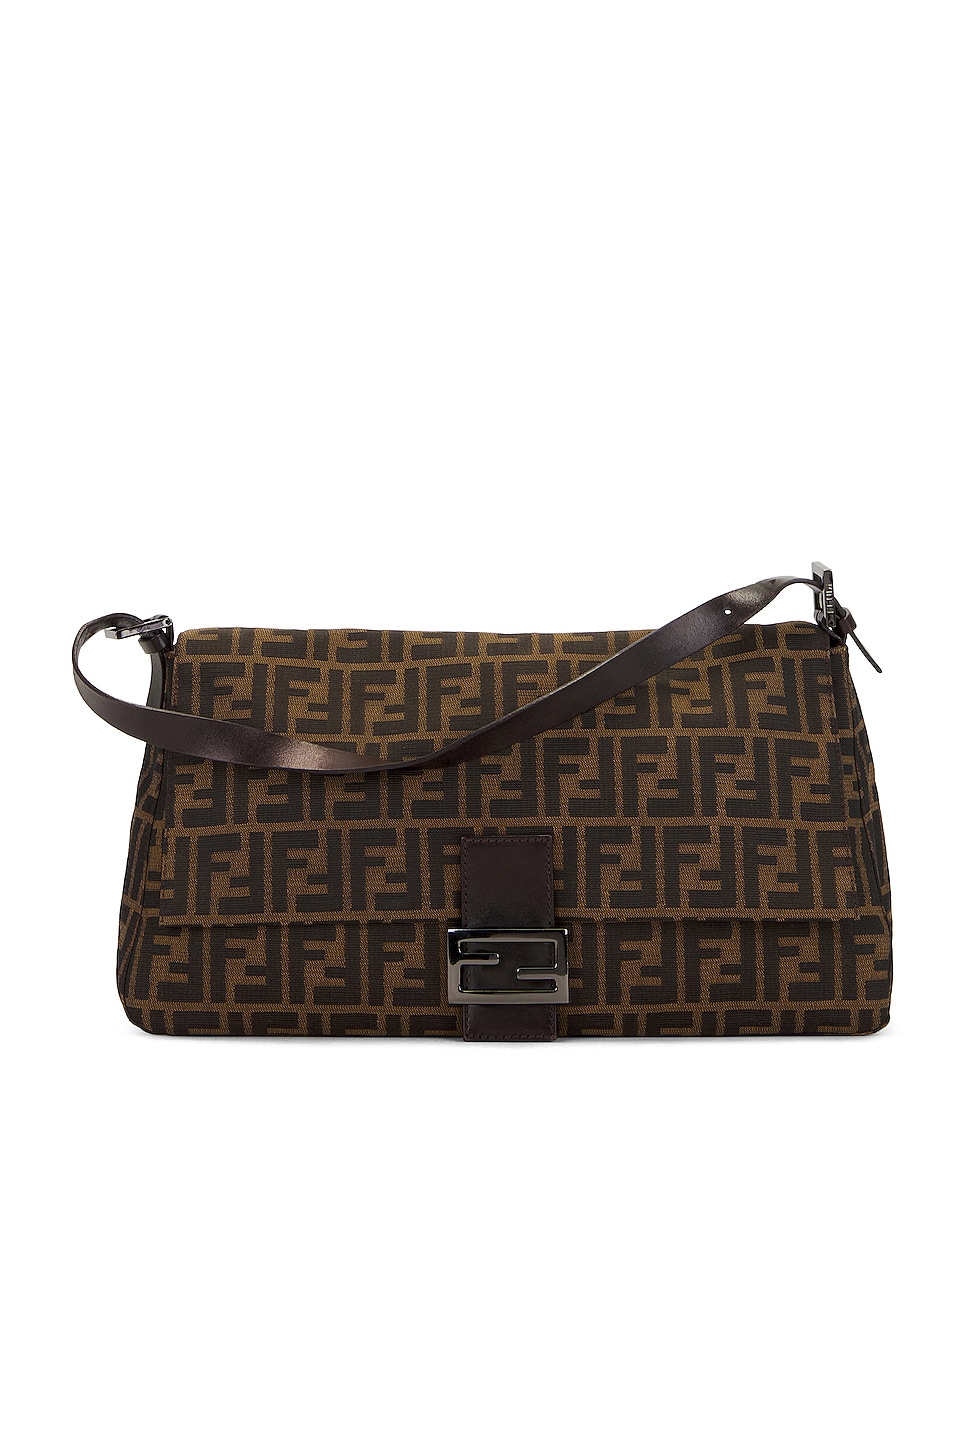 FWRD Renew Louis Vuitton Monogram Denim Loop Hobo Shoulder Bag in